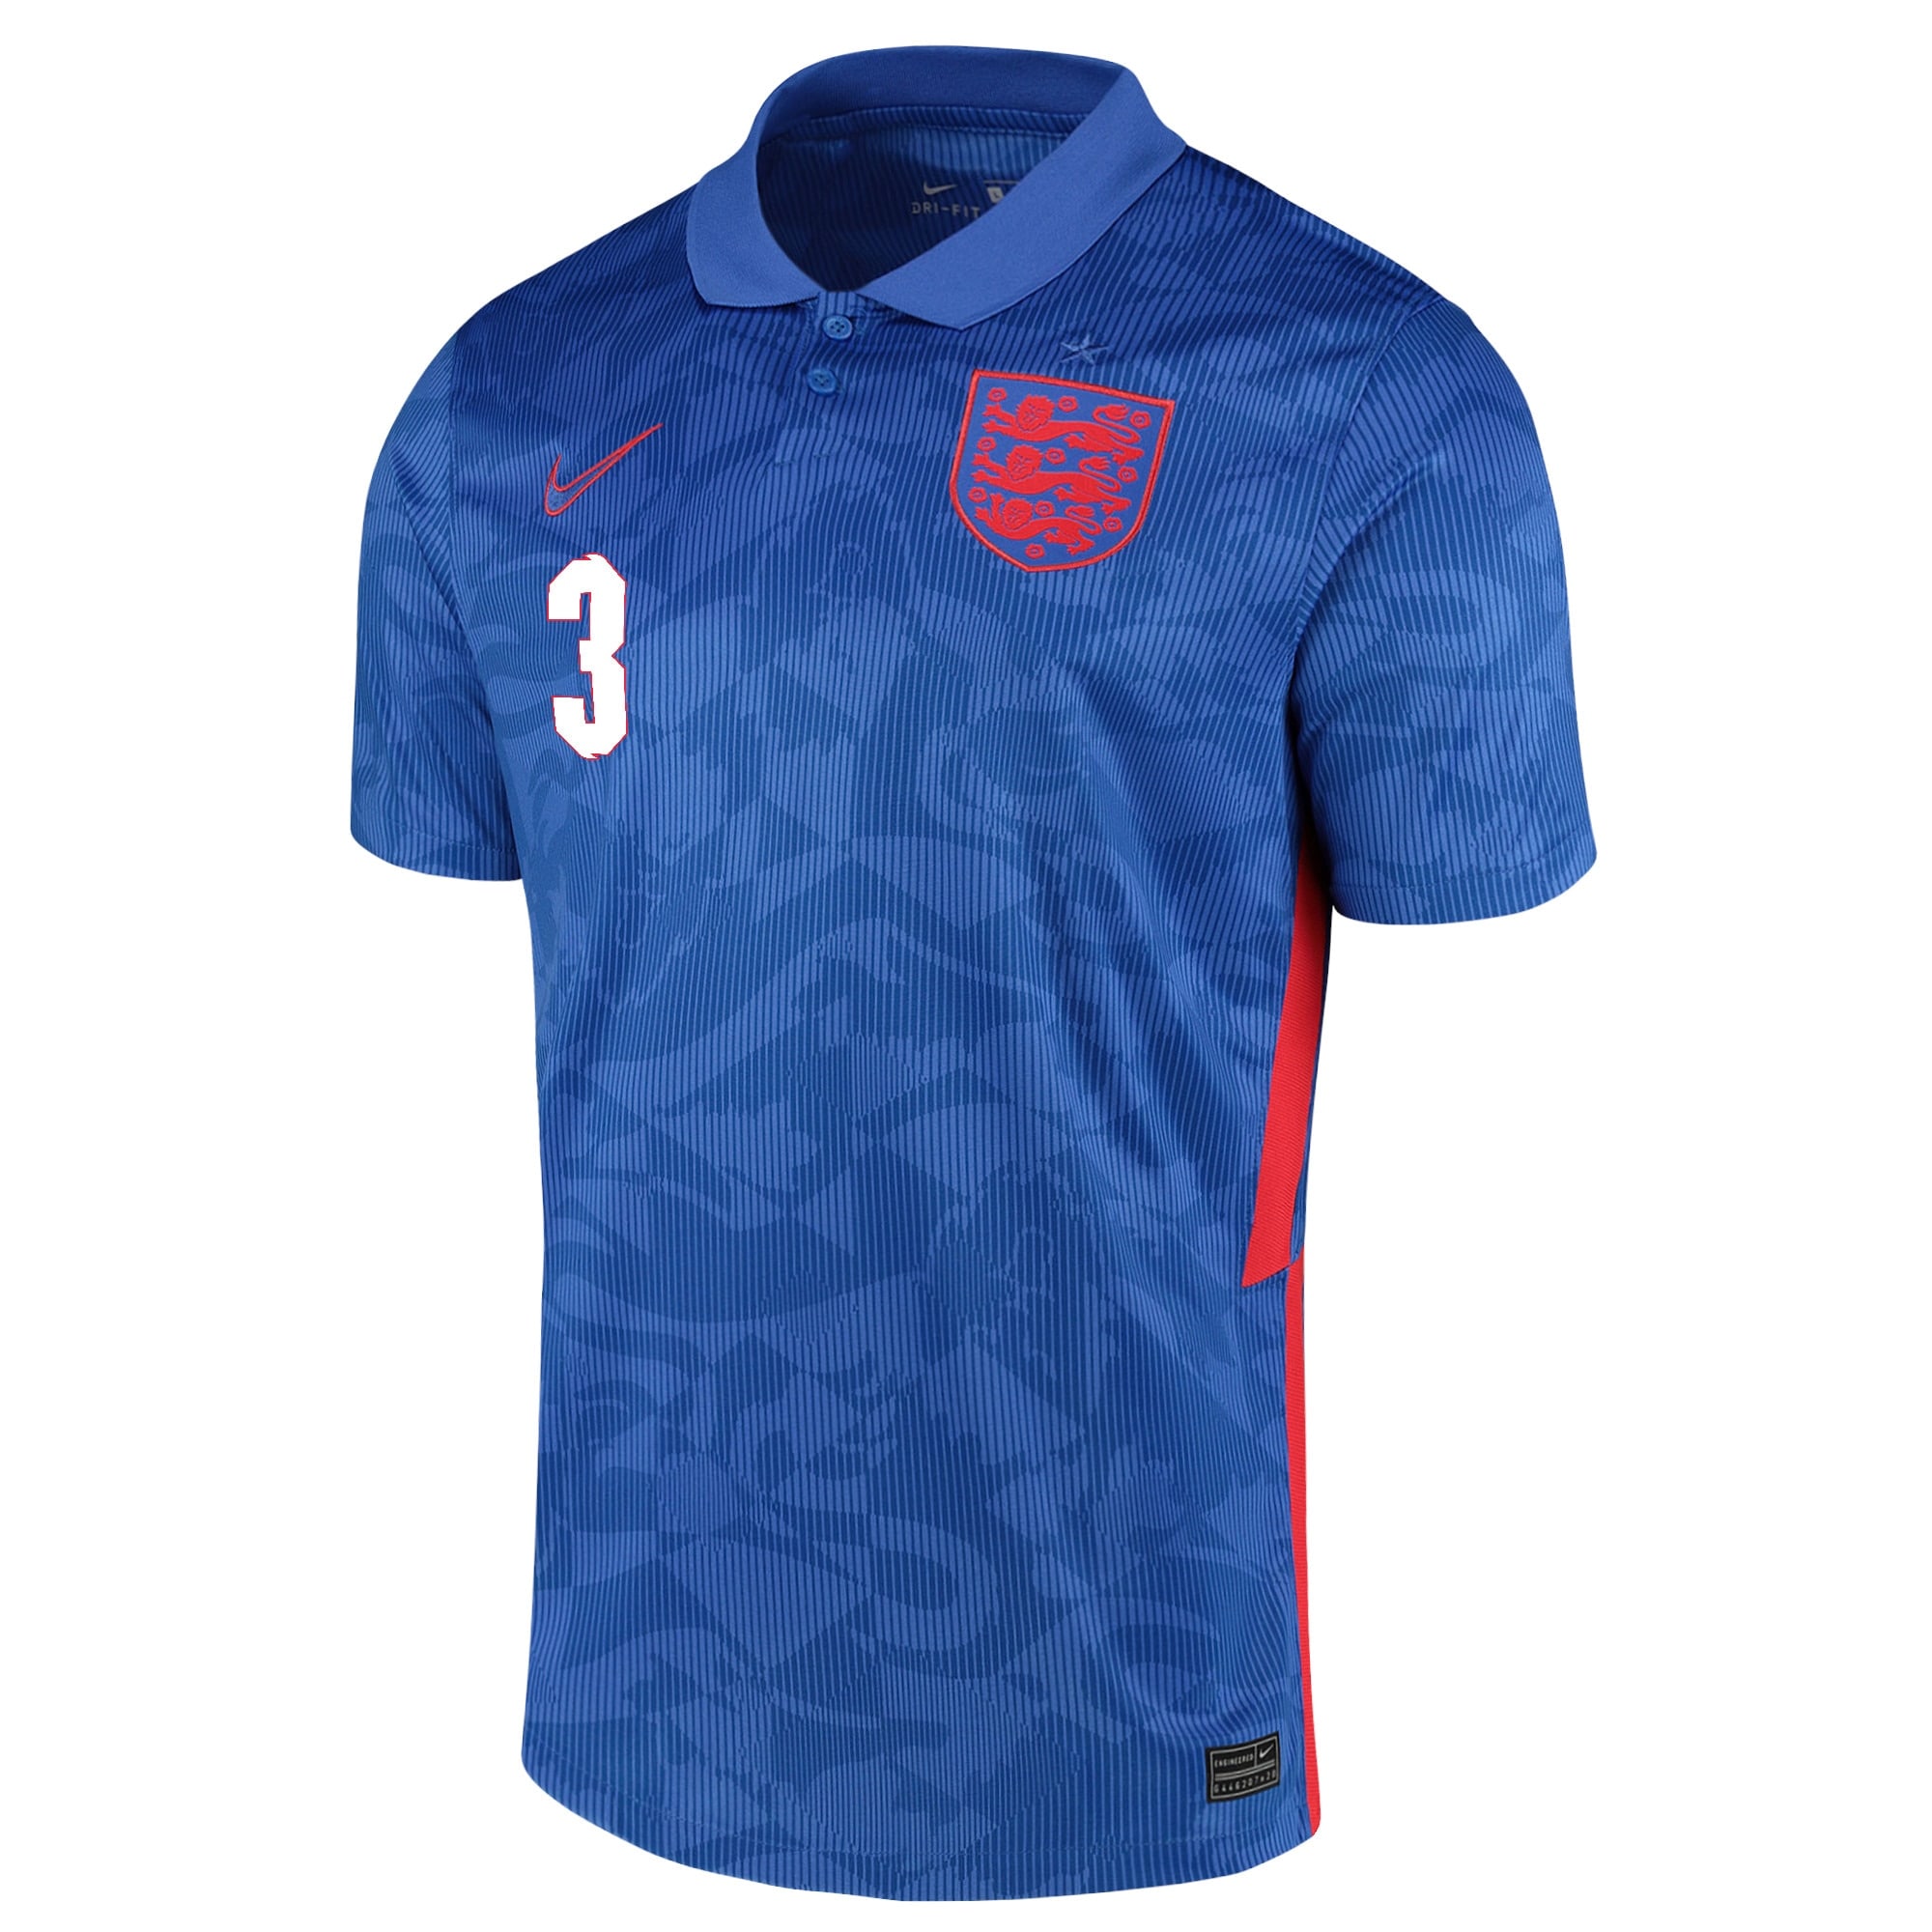 England Away Stadium Shirt 2020-22 with Shaw 3 printing